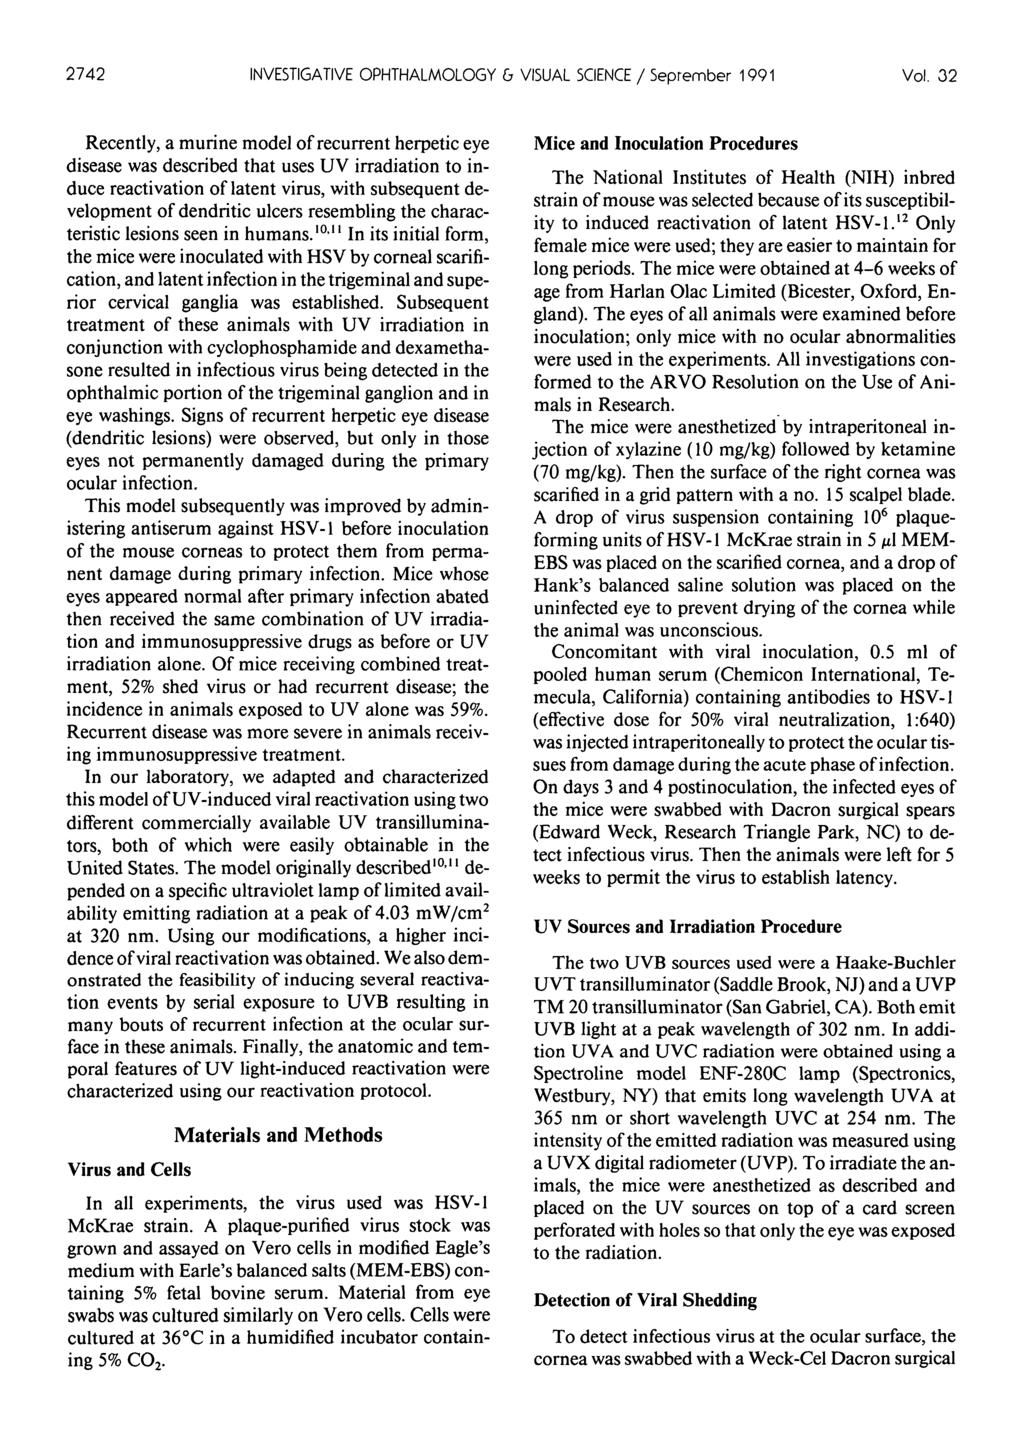 2742 INVESTIGATIVE OPHTHALMOLOGY G VISUAL SCIENCE / Seprember 1991 Vol.